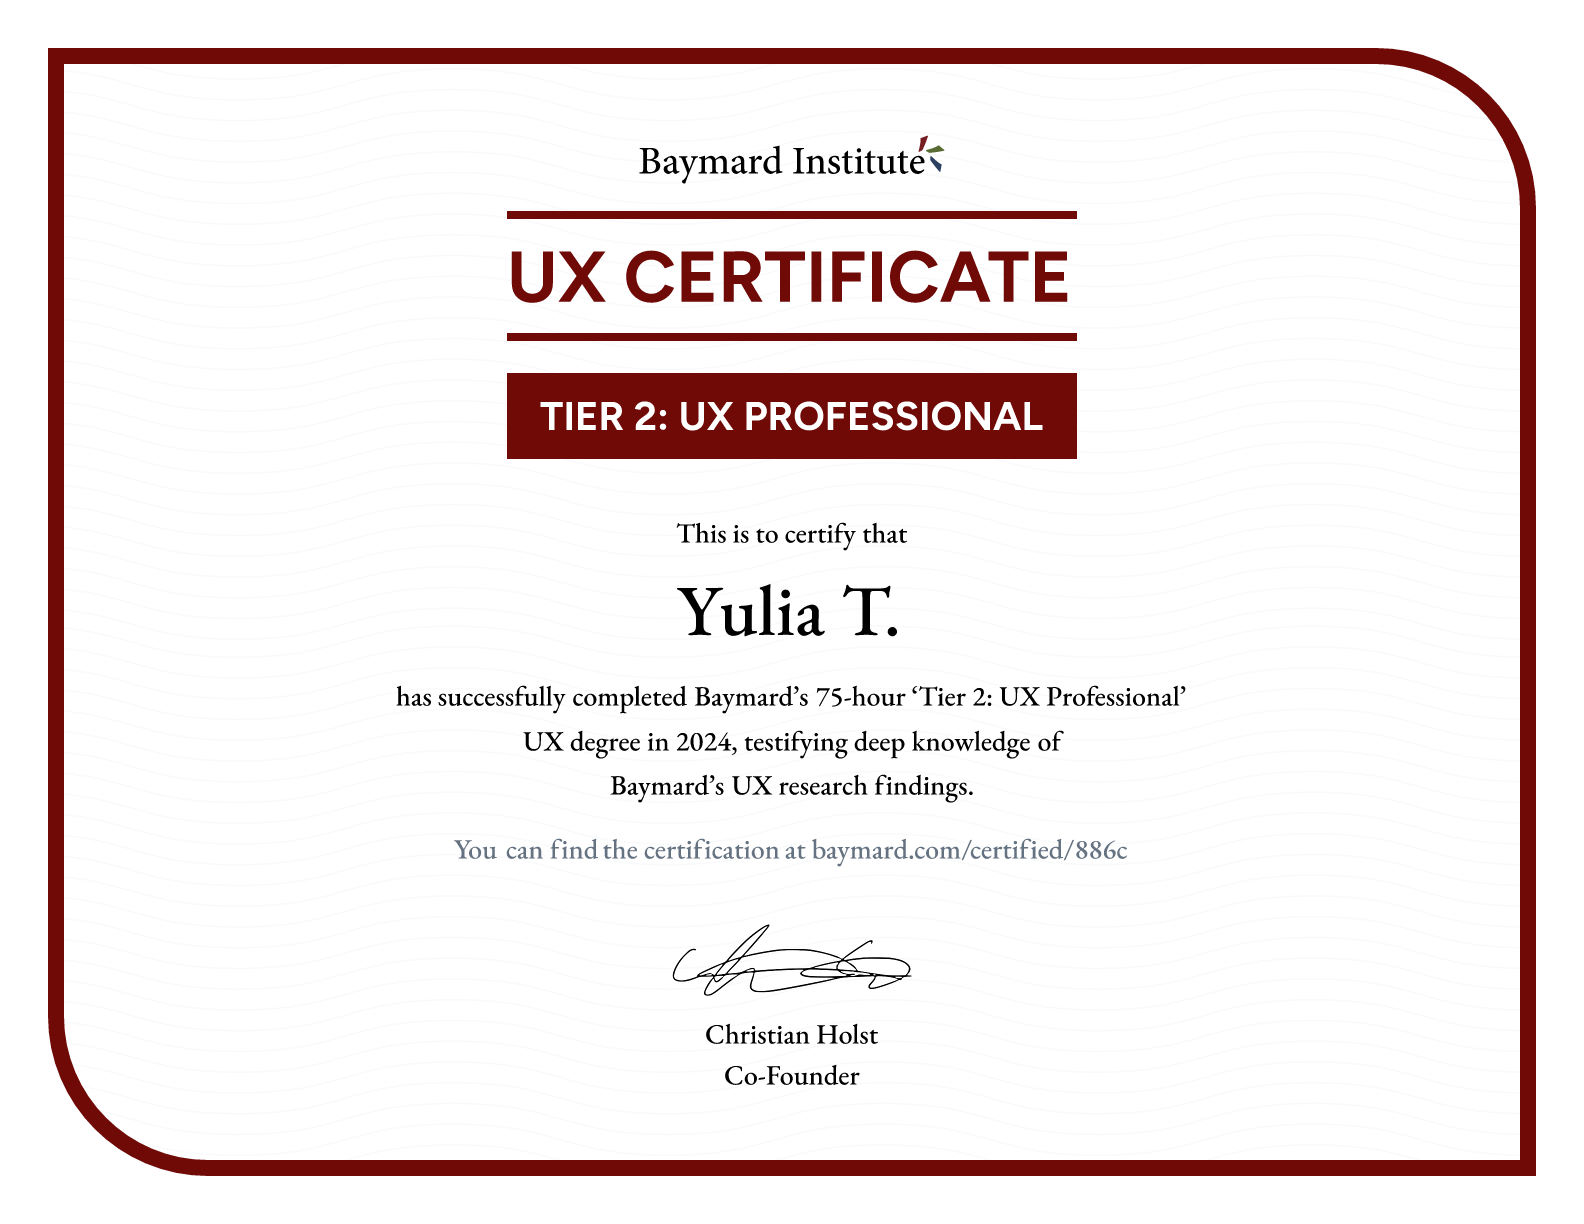 Yulia T.’s certificate